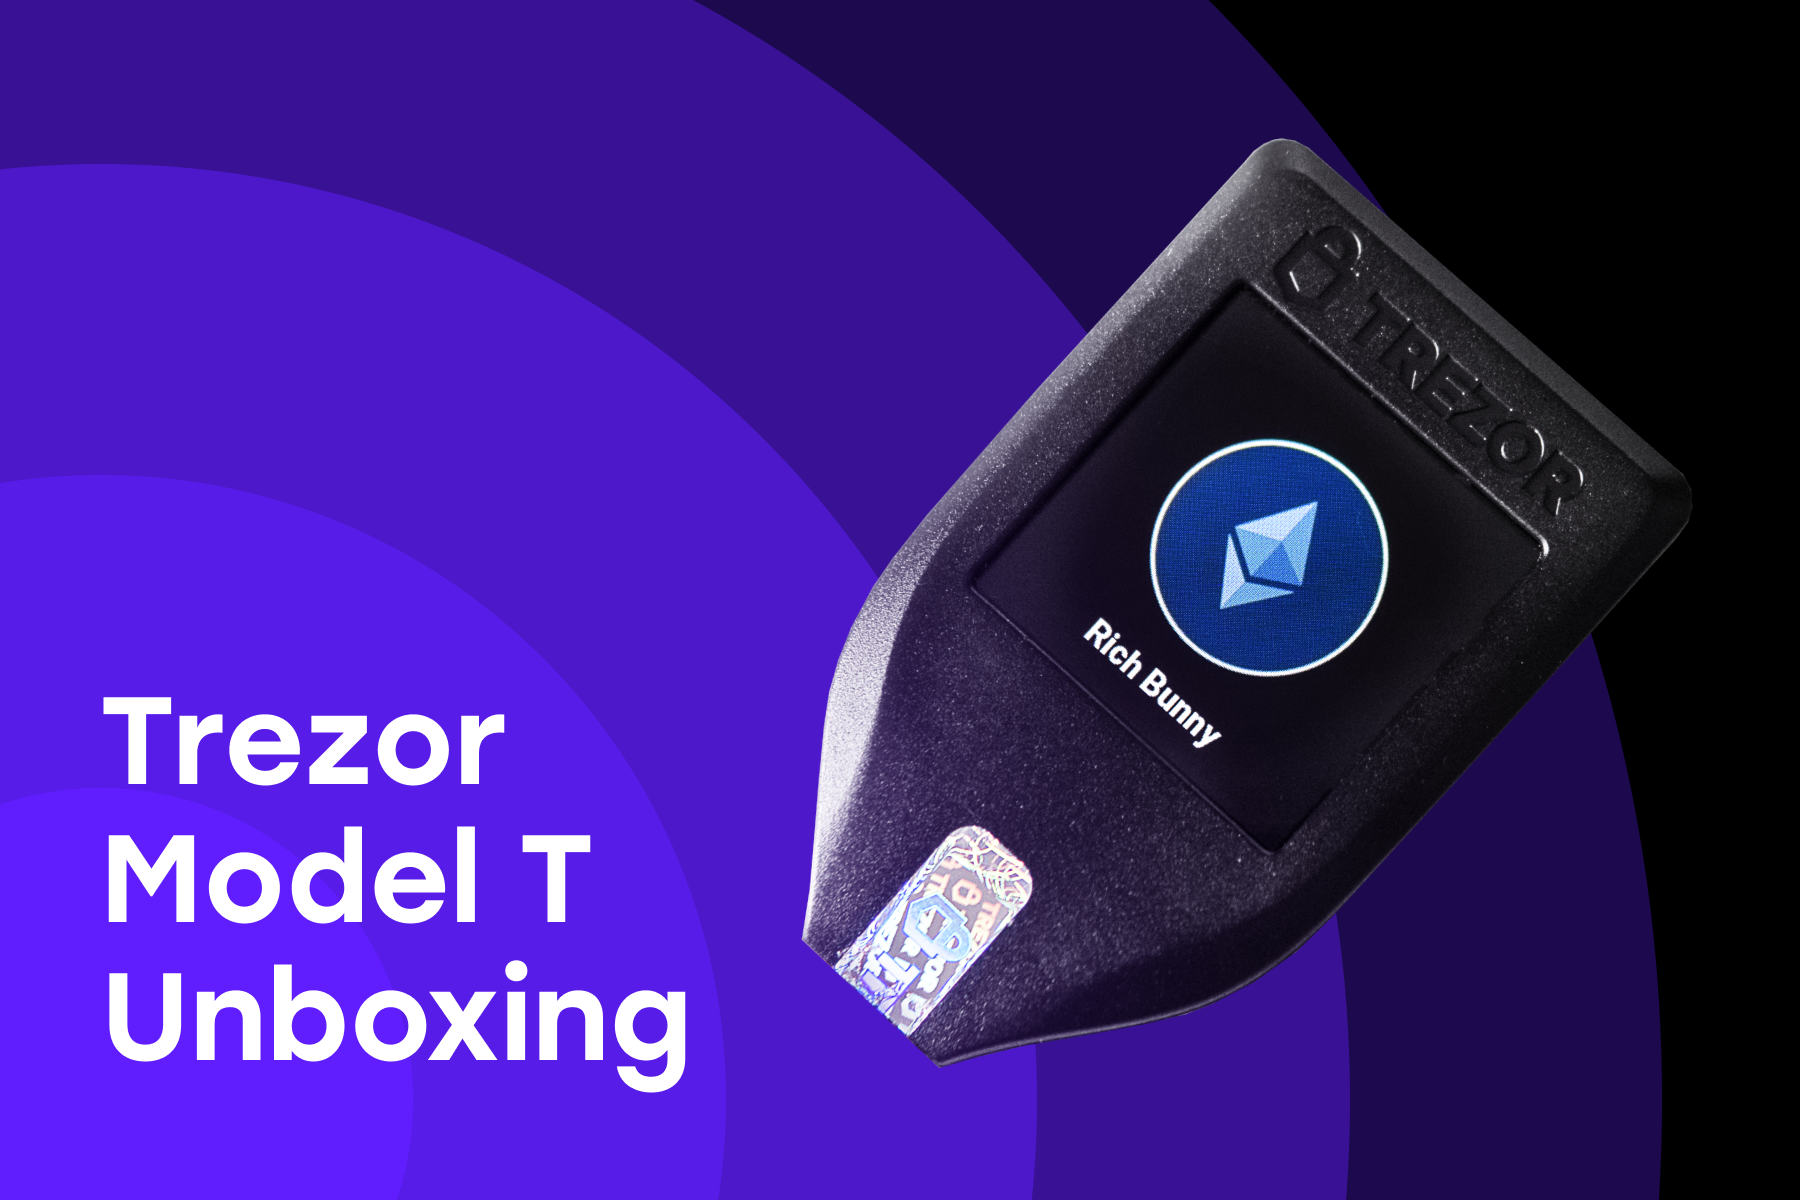 Trezor Model T Unboxing (Trezor Review)